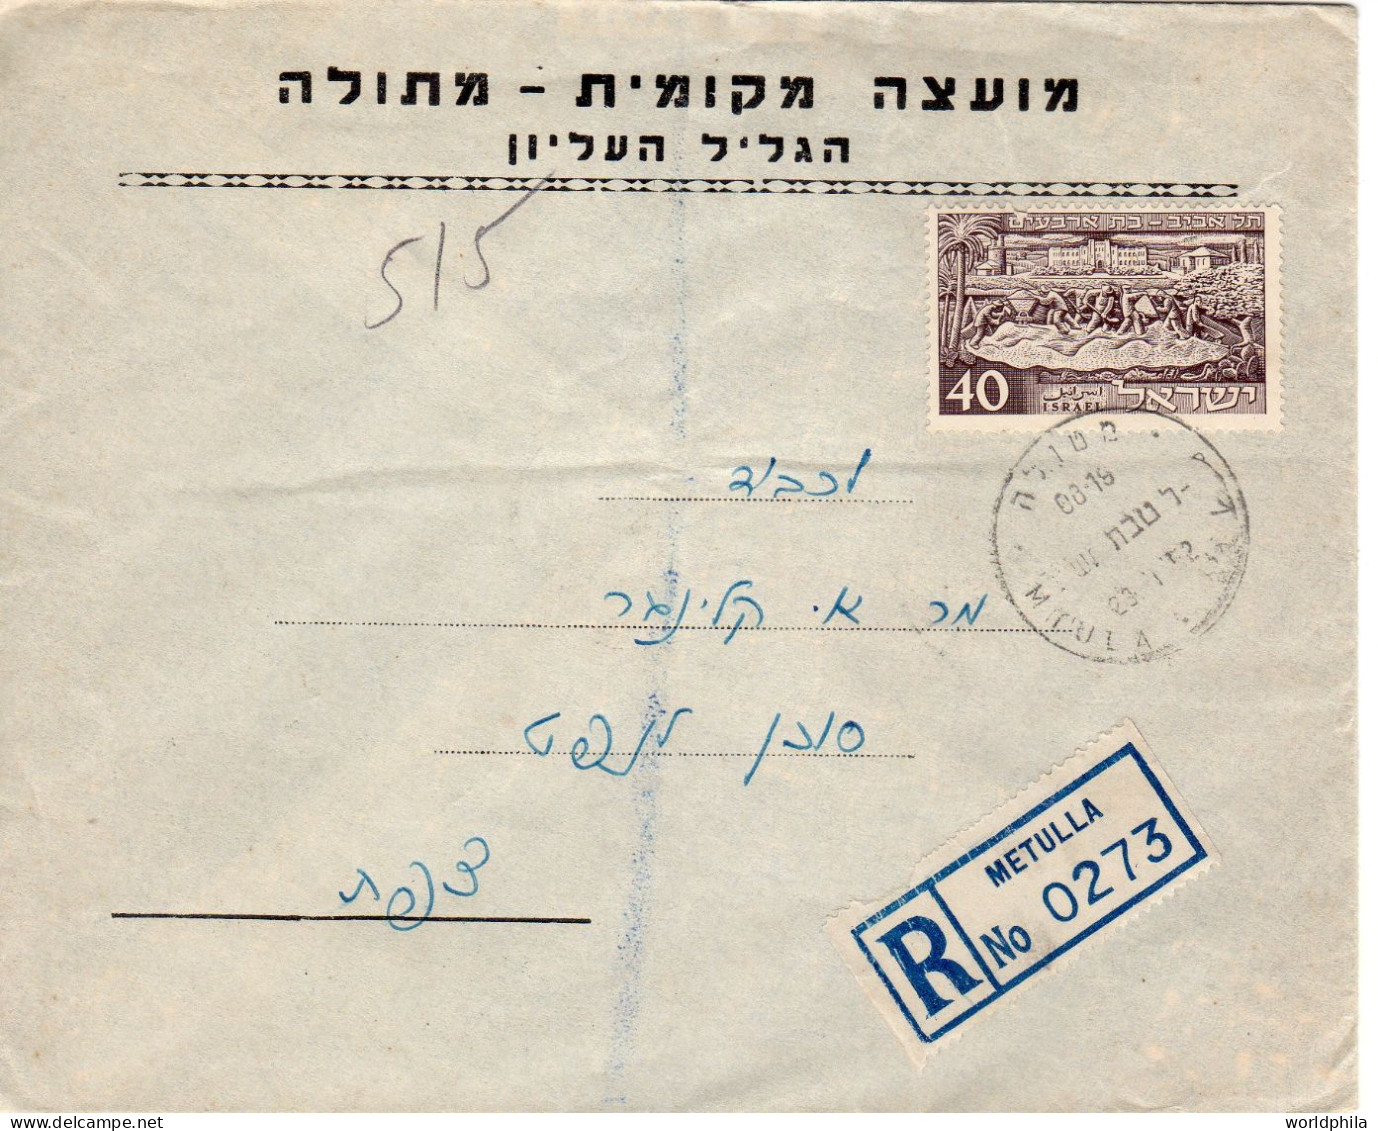 Israel 1952-1954 interesting post marks lot of 5 registered cover II